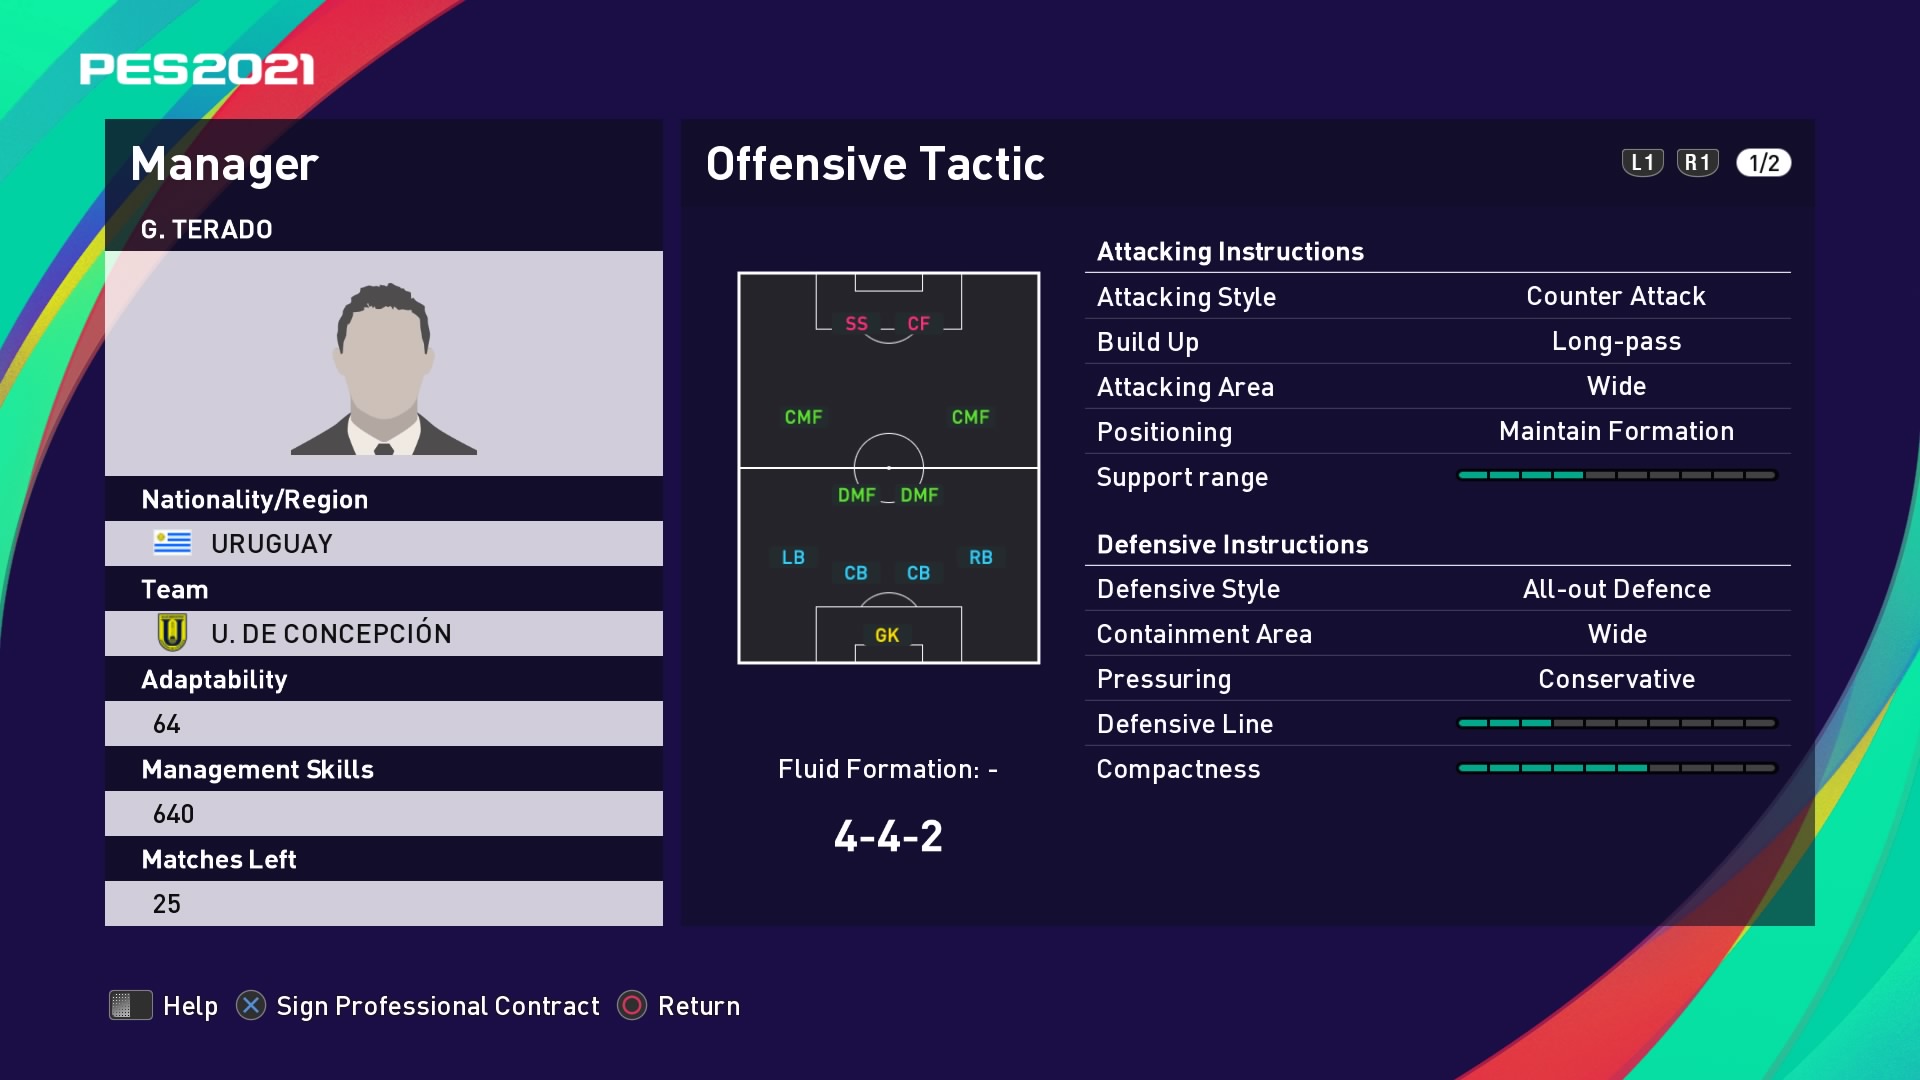 G. Terado (Eduardo Acevedo) Offensive Tactic in PES 2021 myClub